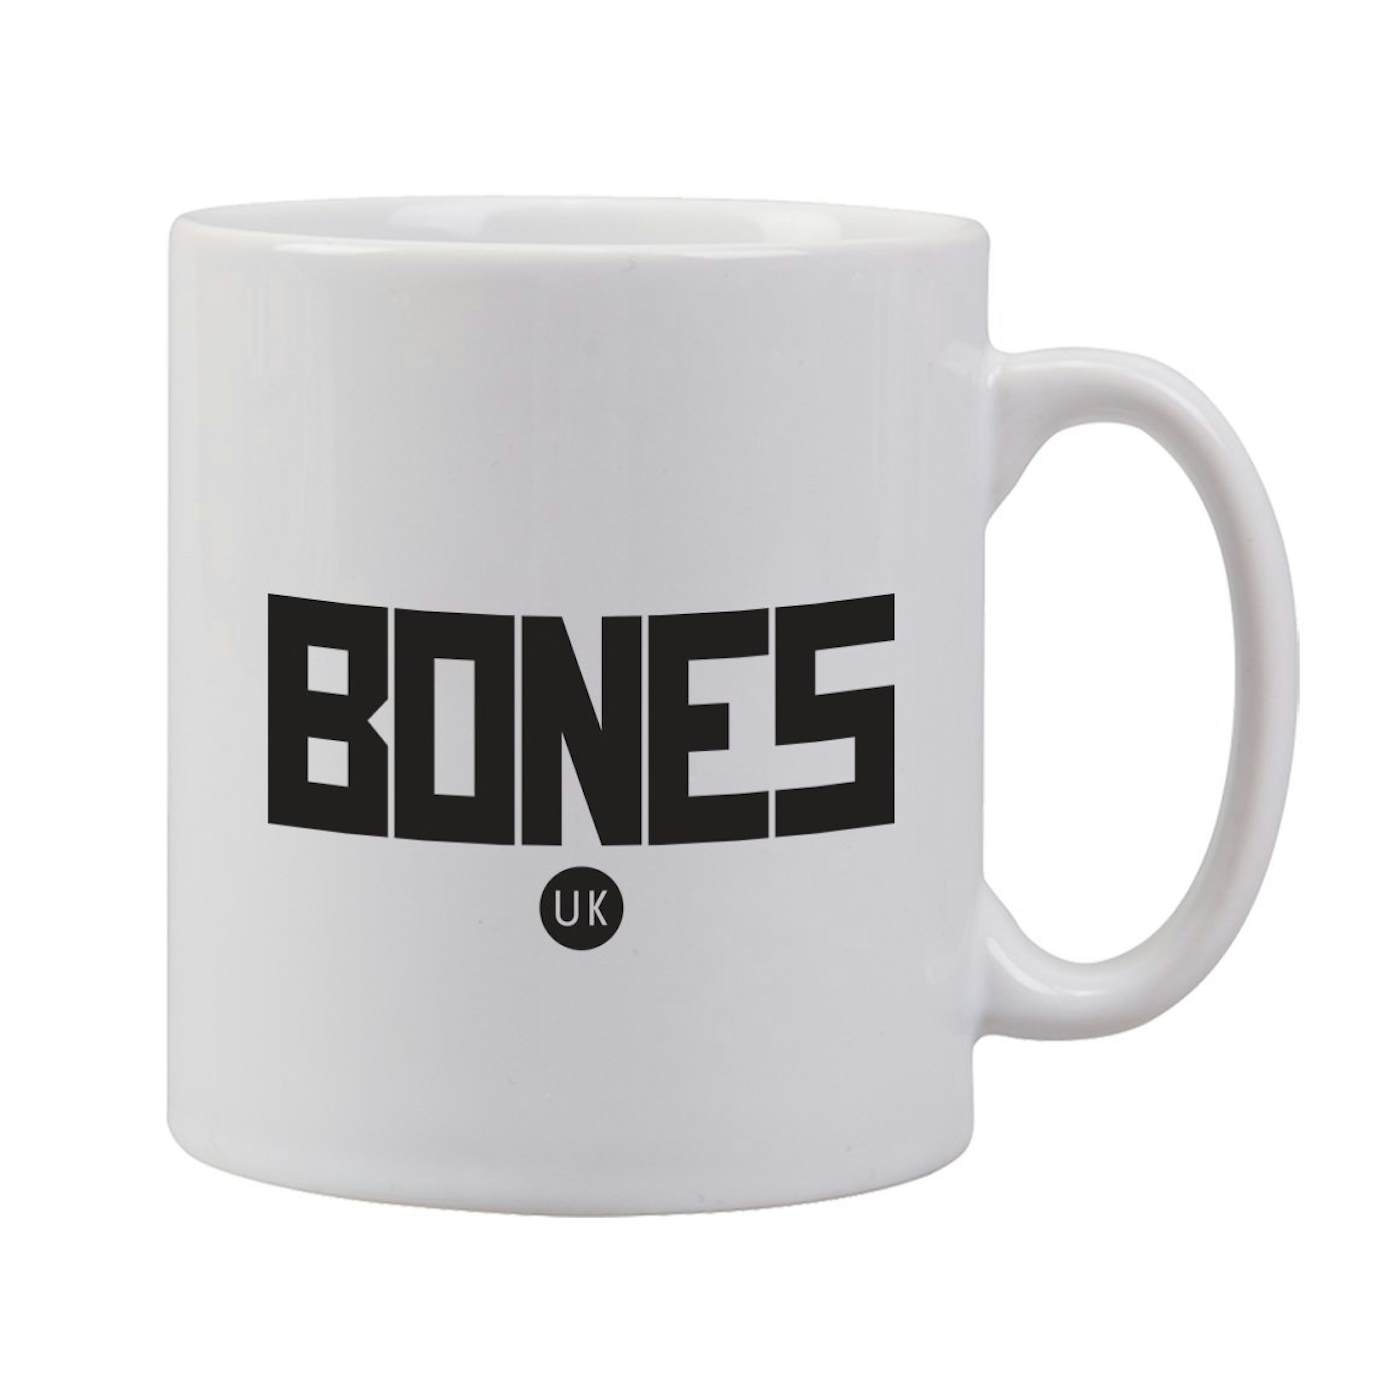 BONES UK - Mug